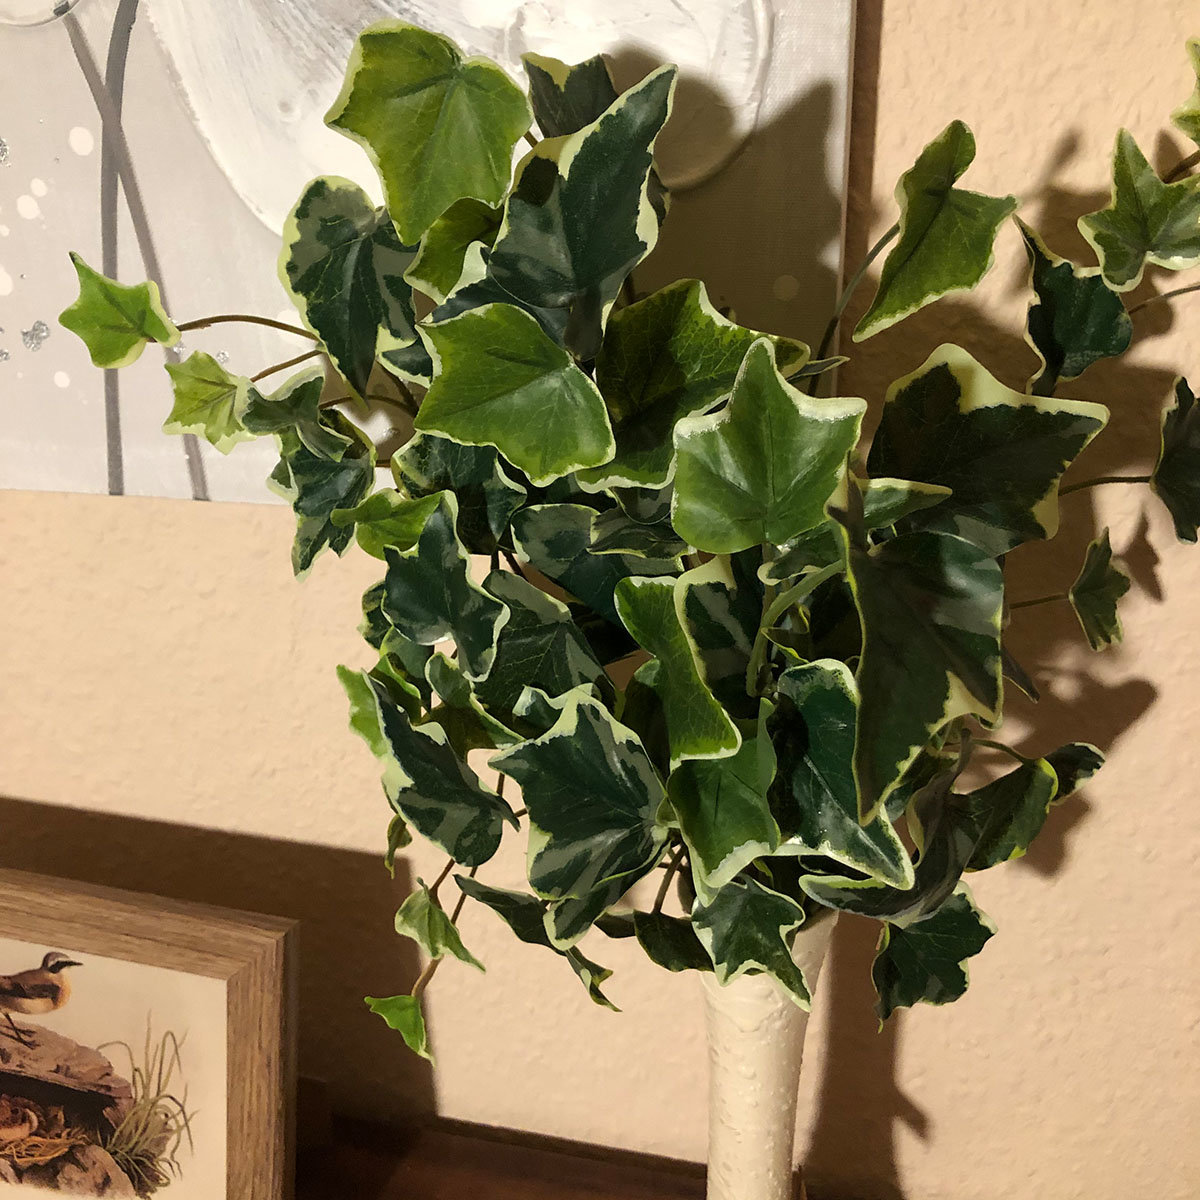 Kunstpflanze Efeuhänger, 45 cm, weiß-grün
| #3